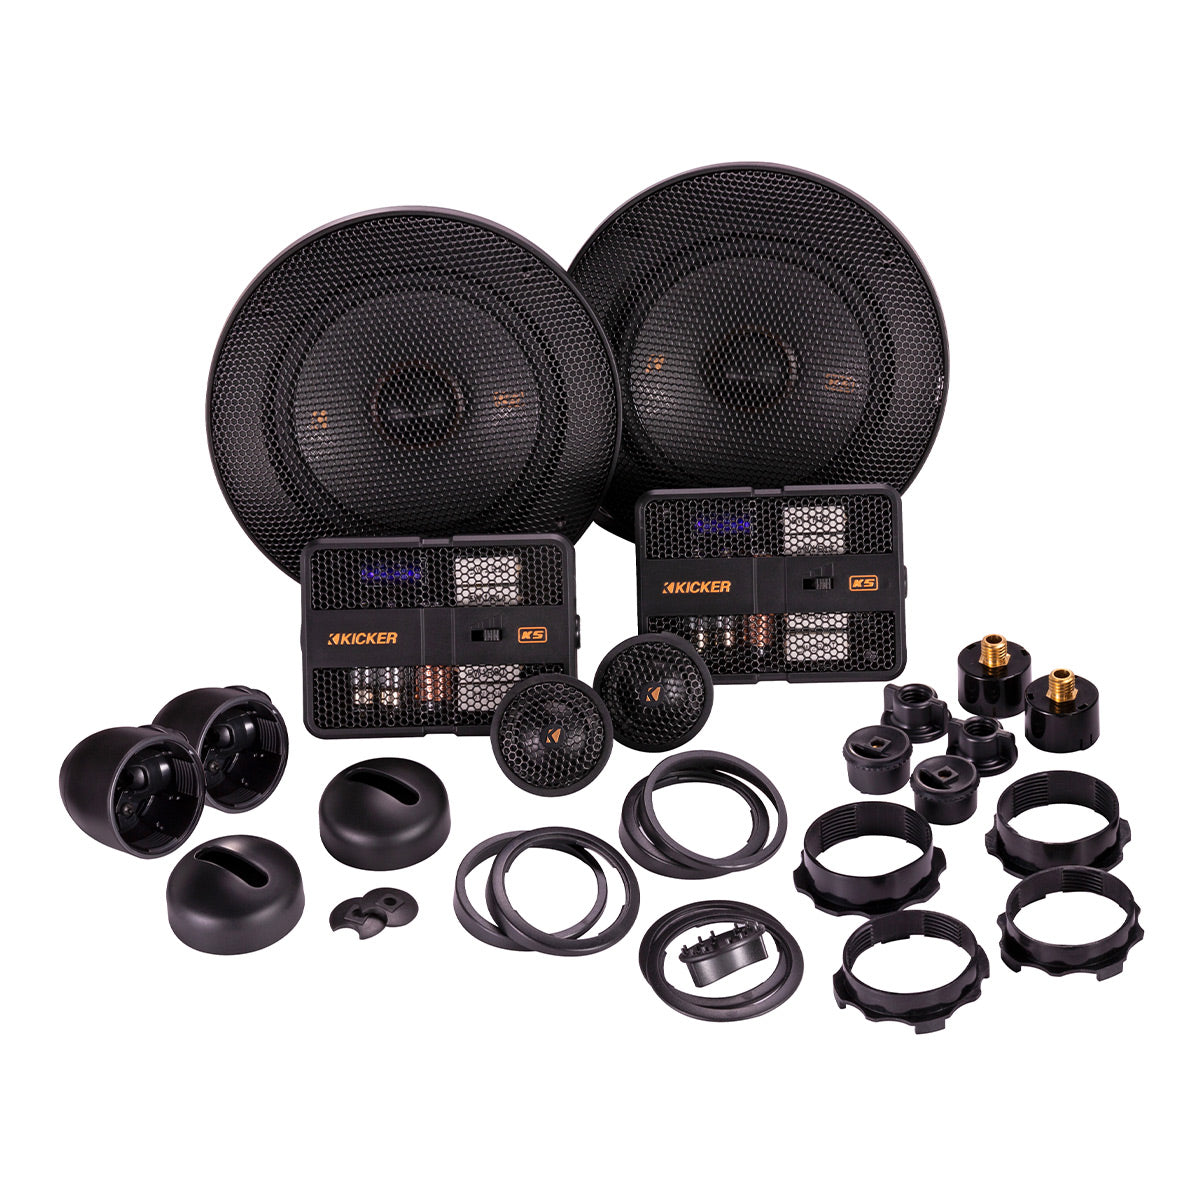 Kicker 51KSS504 5.25" KS Series Component Speaker System